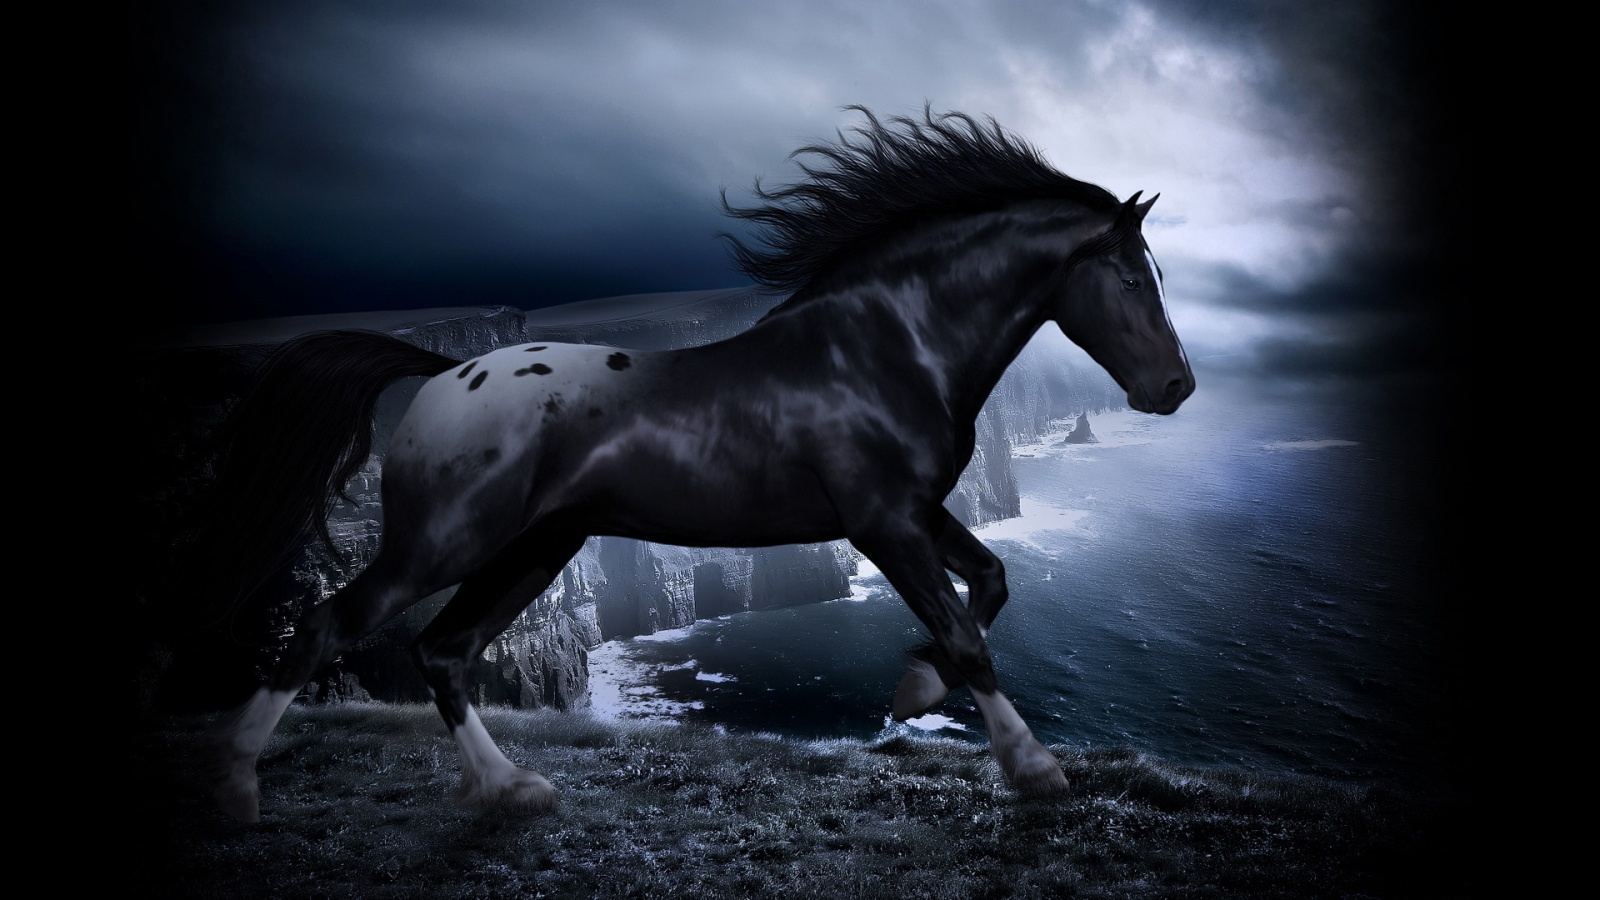 Horse pictures for desktop background